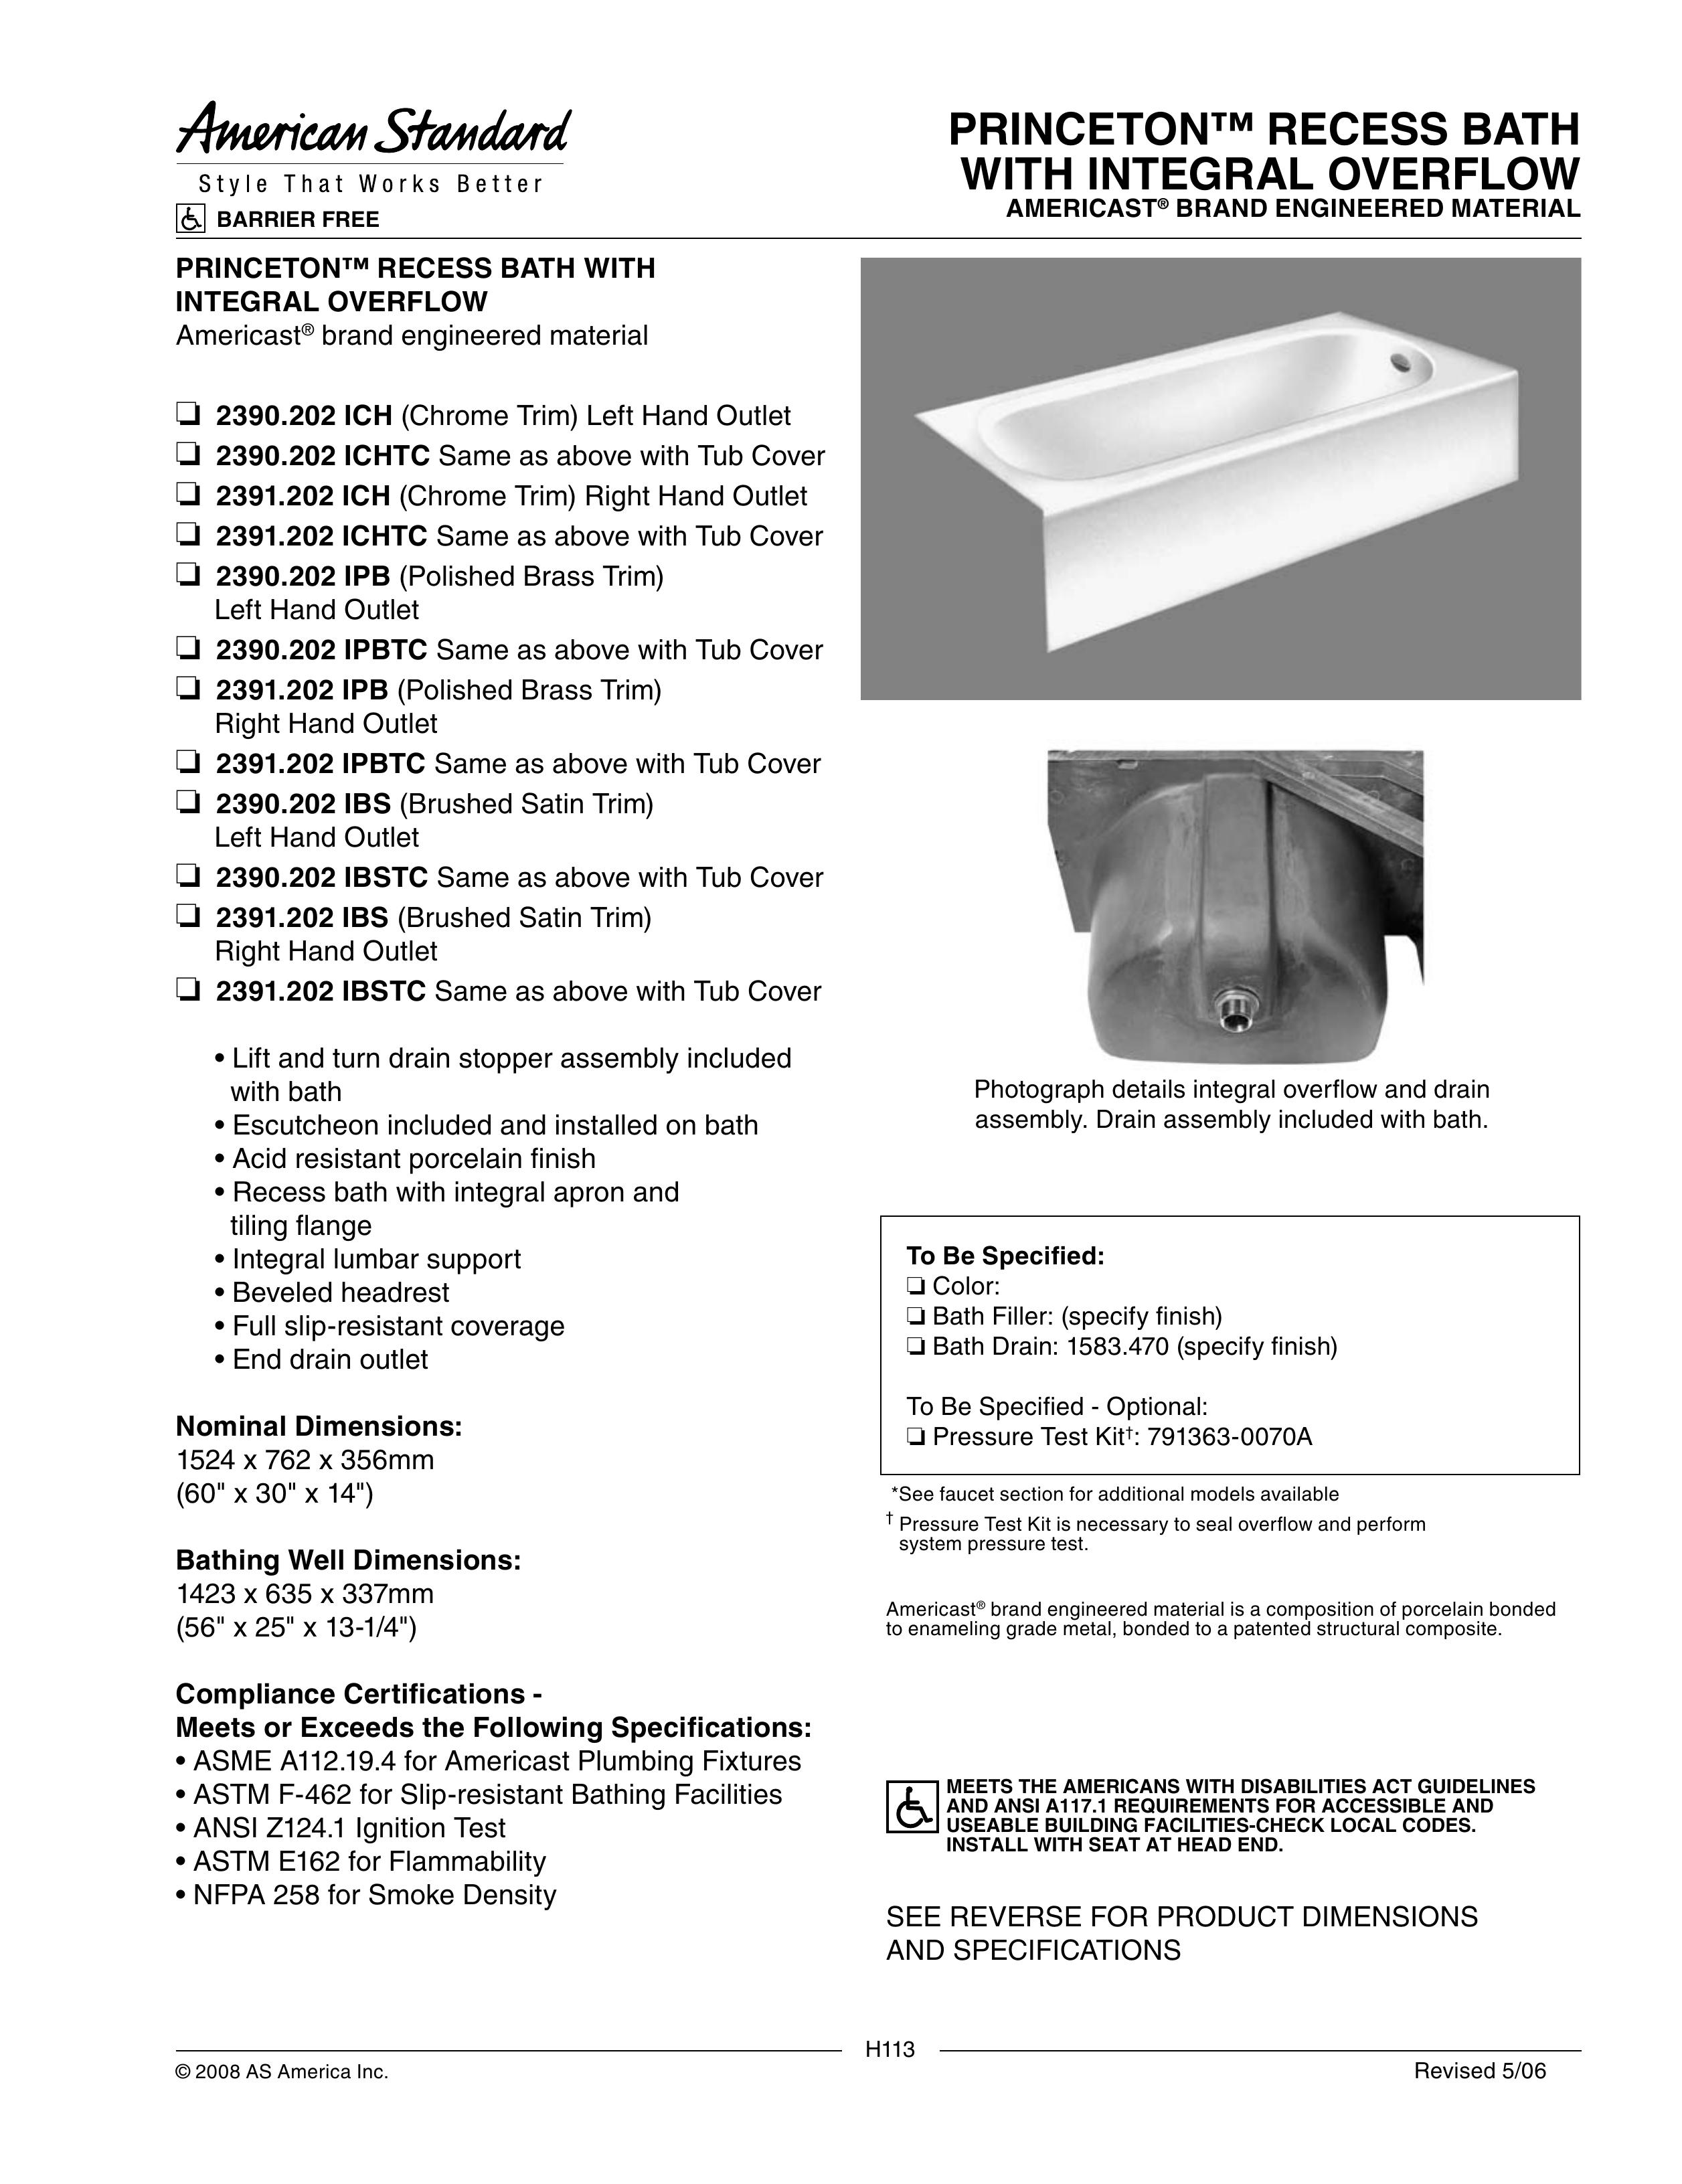 American Standard 2390.202 IBS Hot Tub User Manual